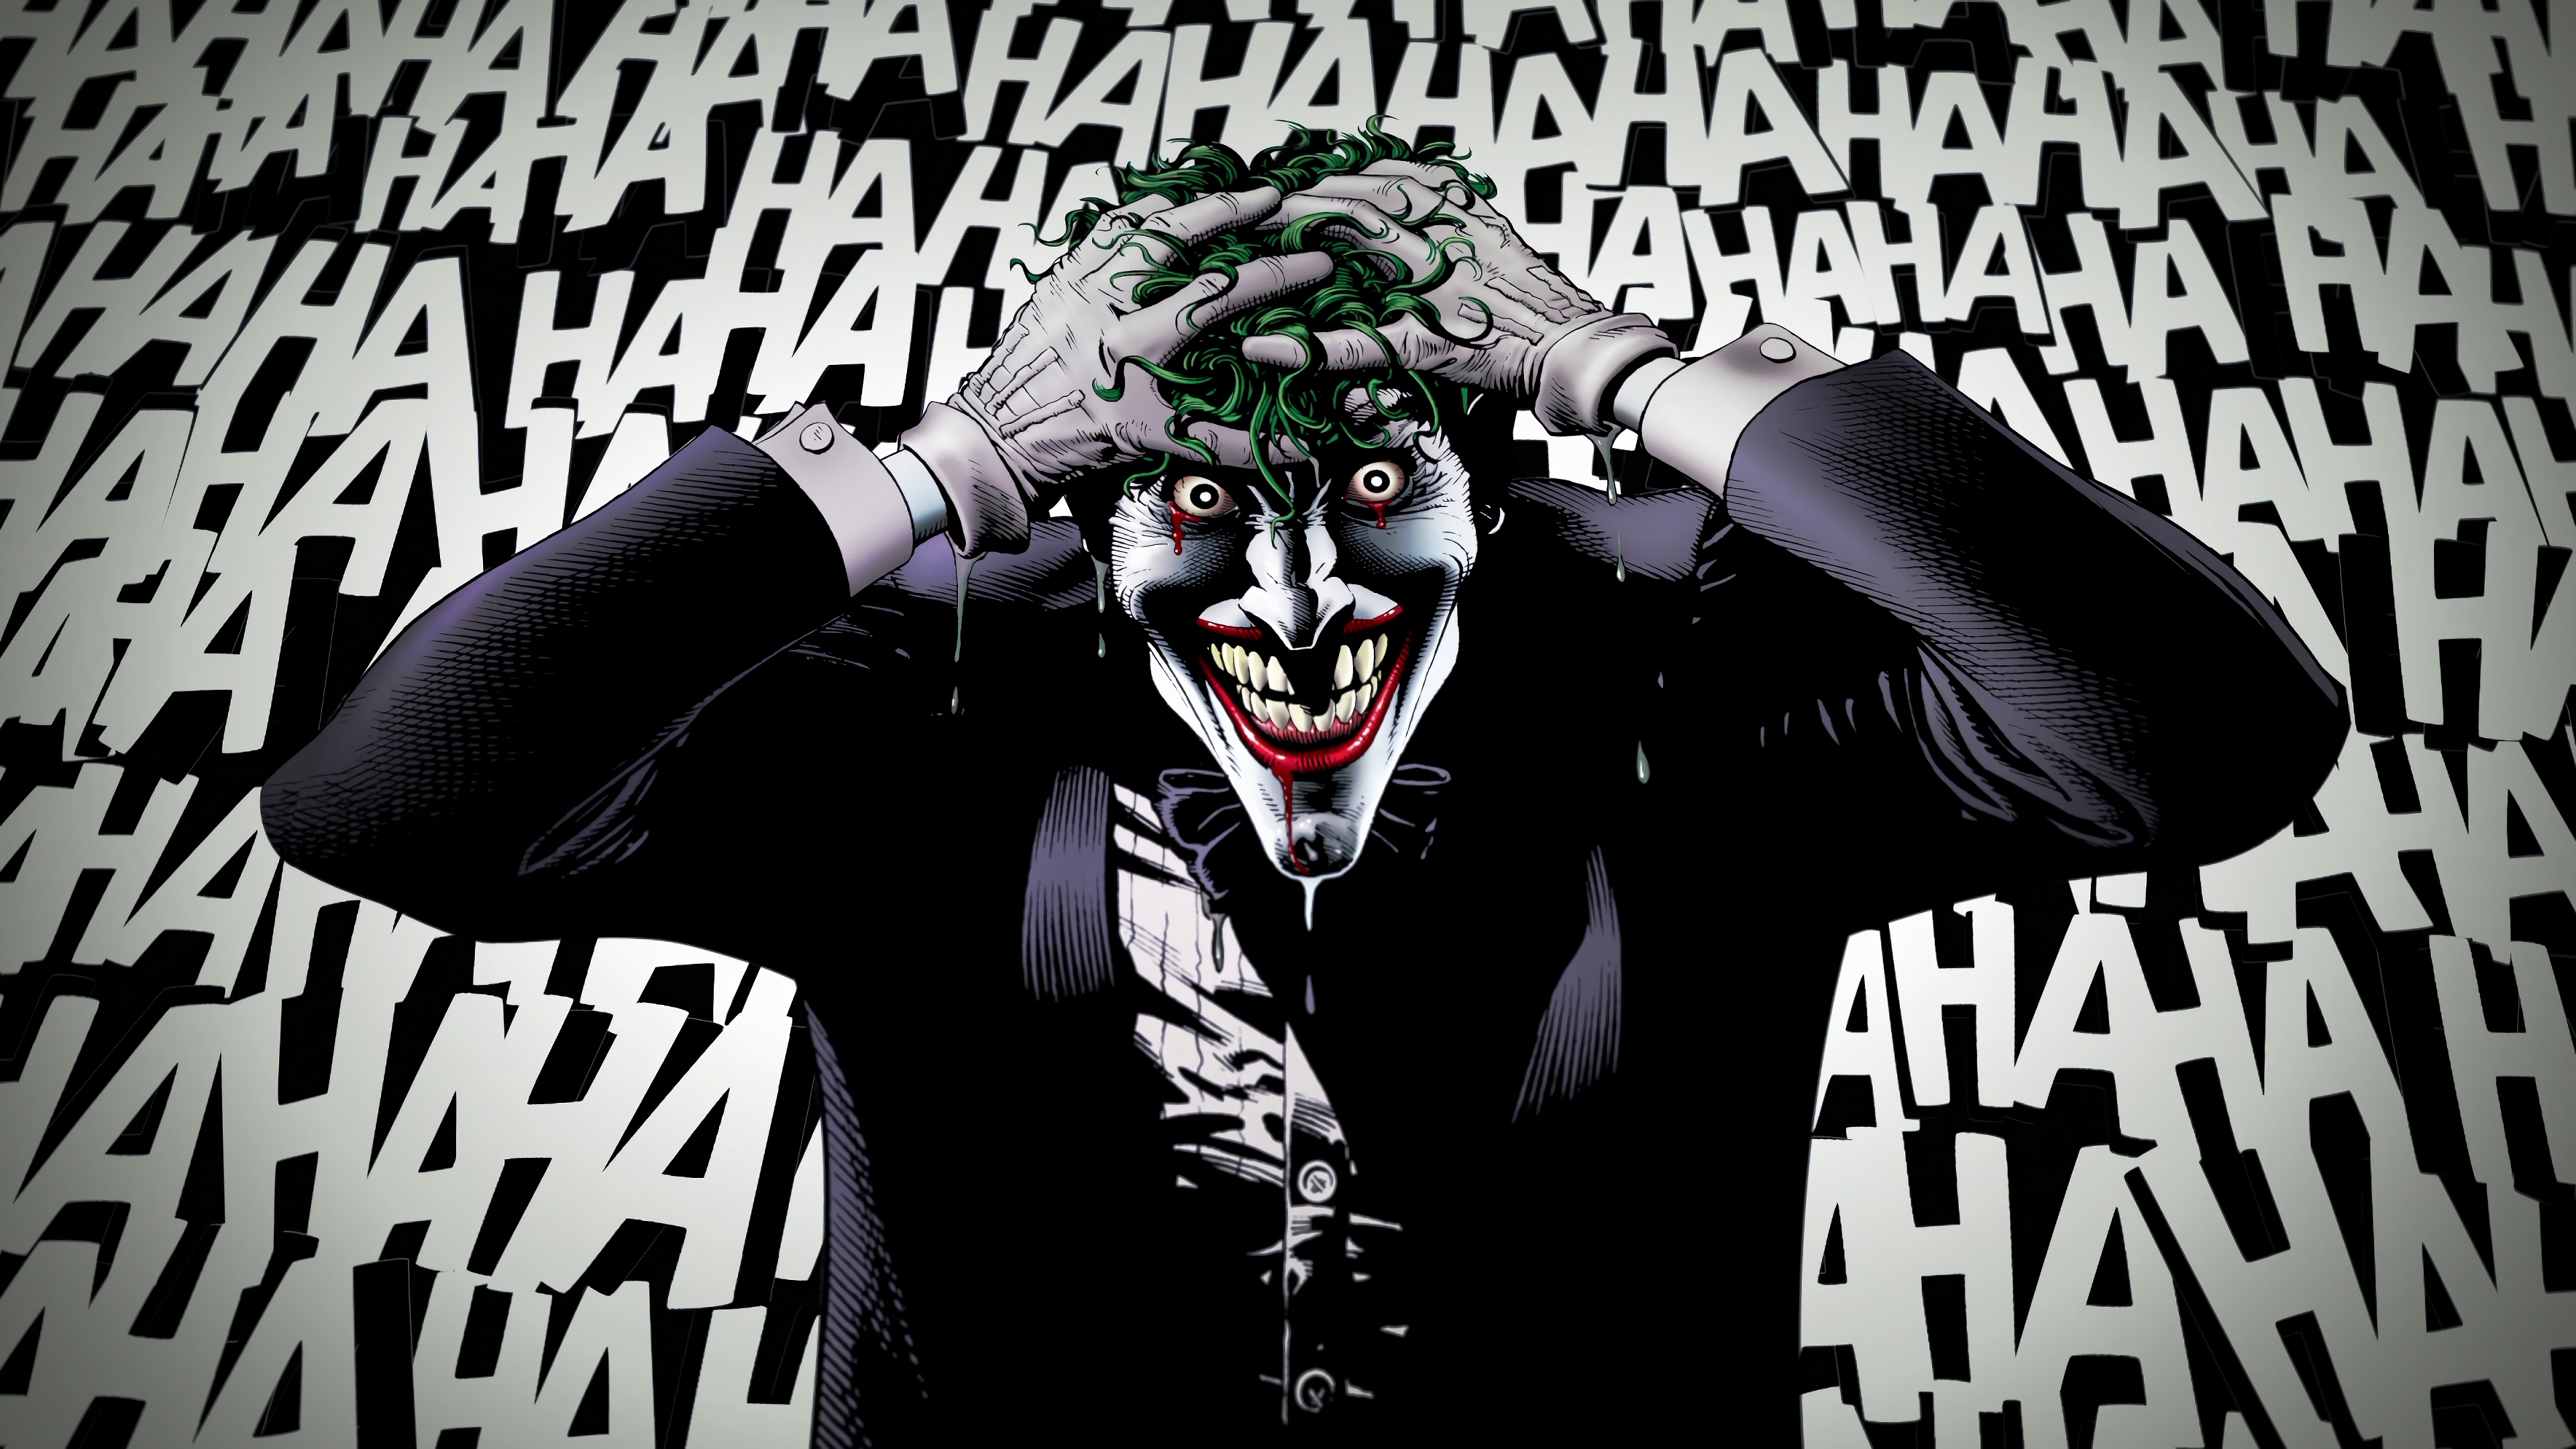 12+] Joker Hahaha Wallpapers - WallpaperSafari